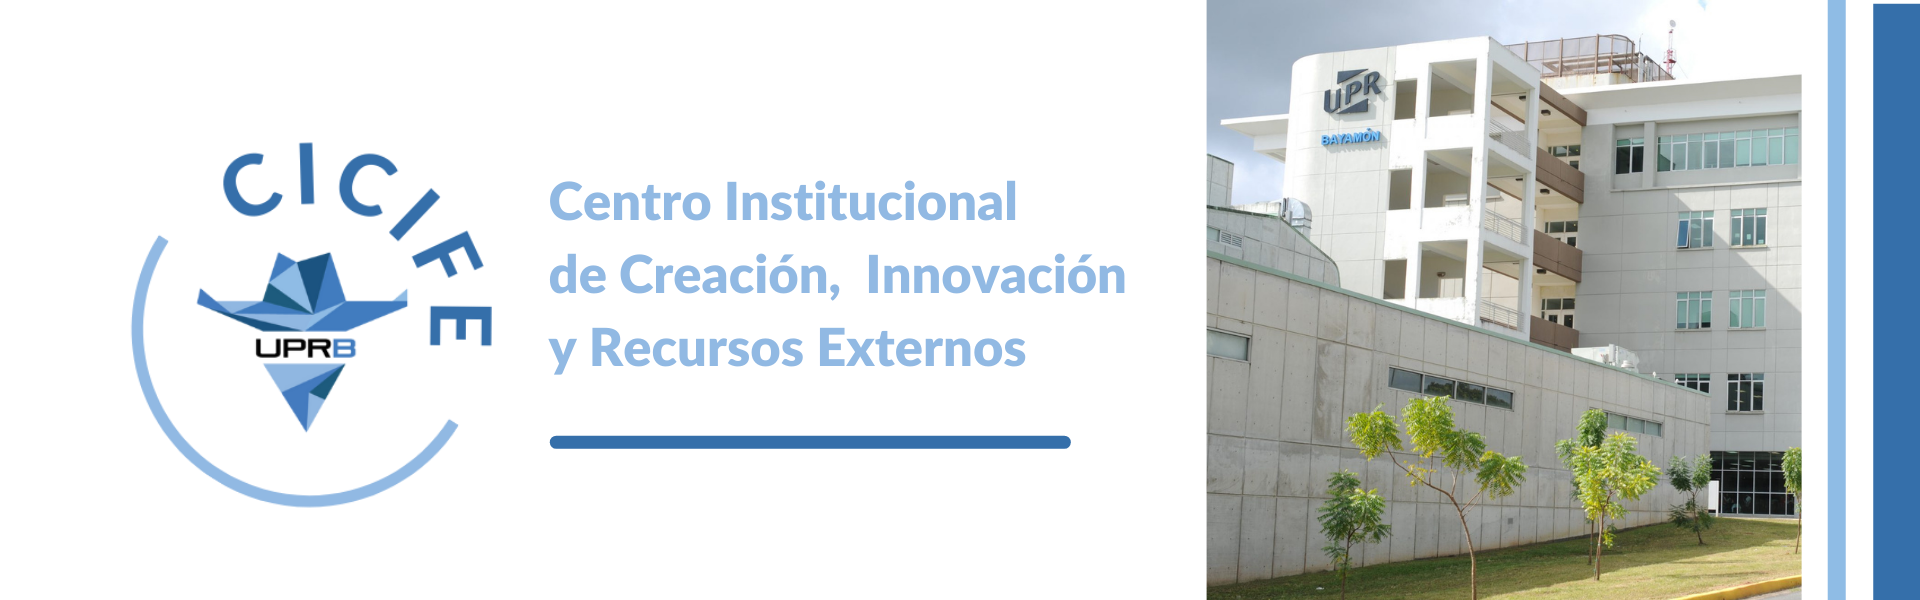 Centro Institucional de Creación, Innovación y Recursos Externos